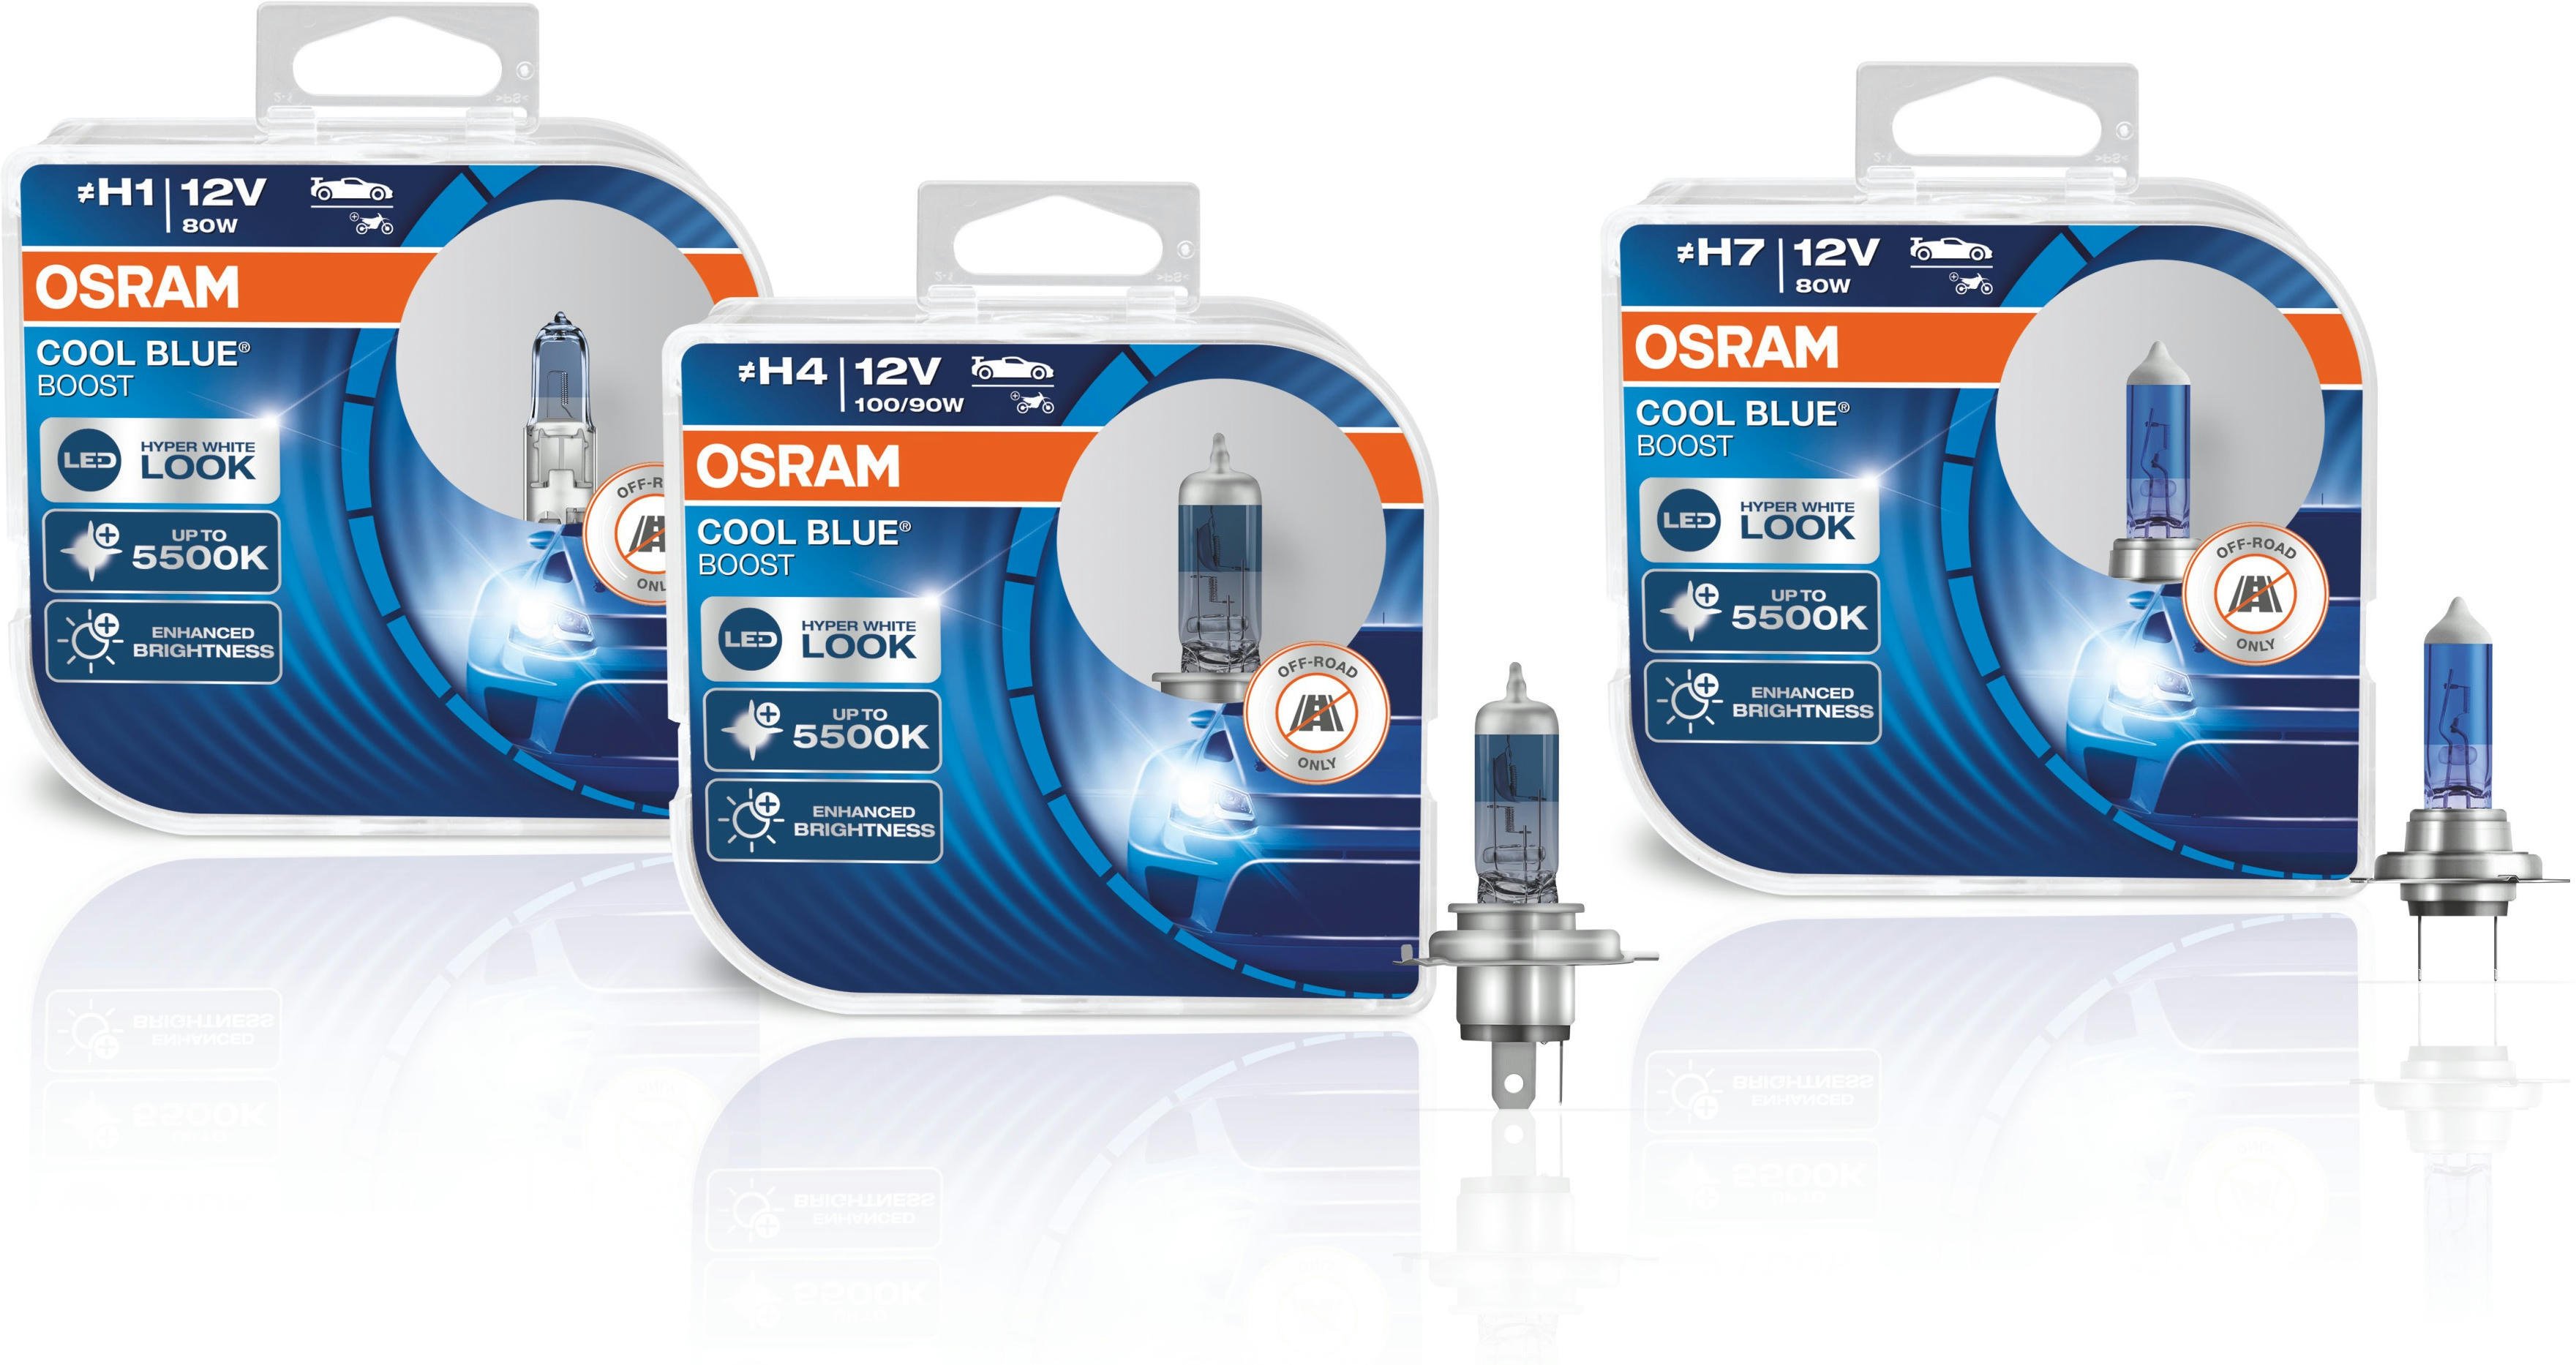 Лампа Osram галогенова 12V H4 100/90W P43 Cool Blue Boost, Duobox (2шт) (OS_62193_CBB-HCB)фото6